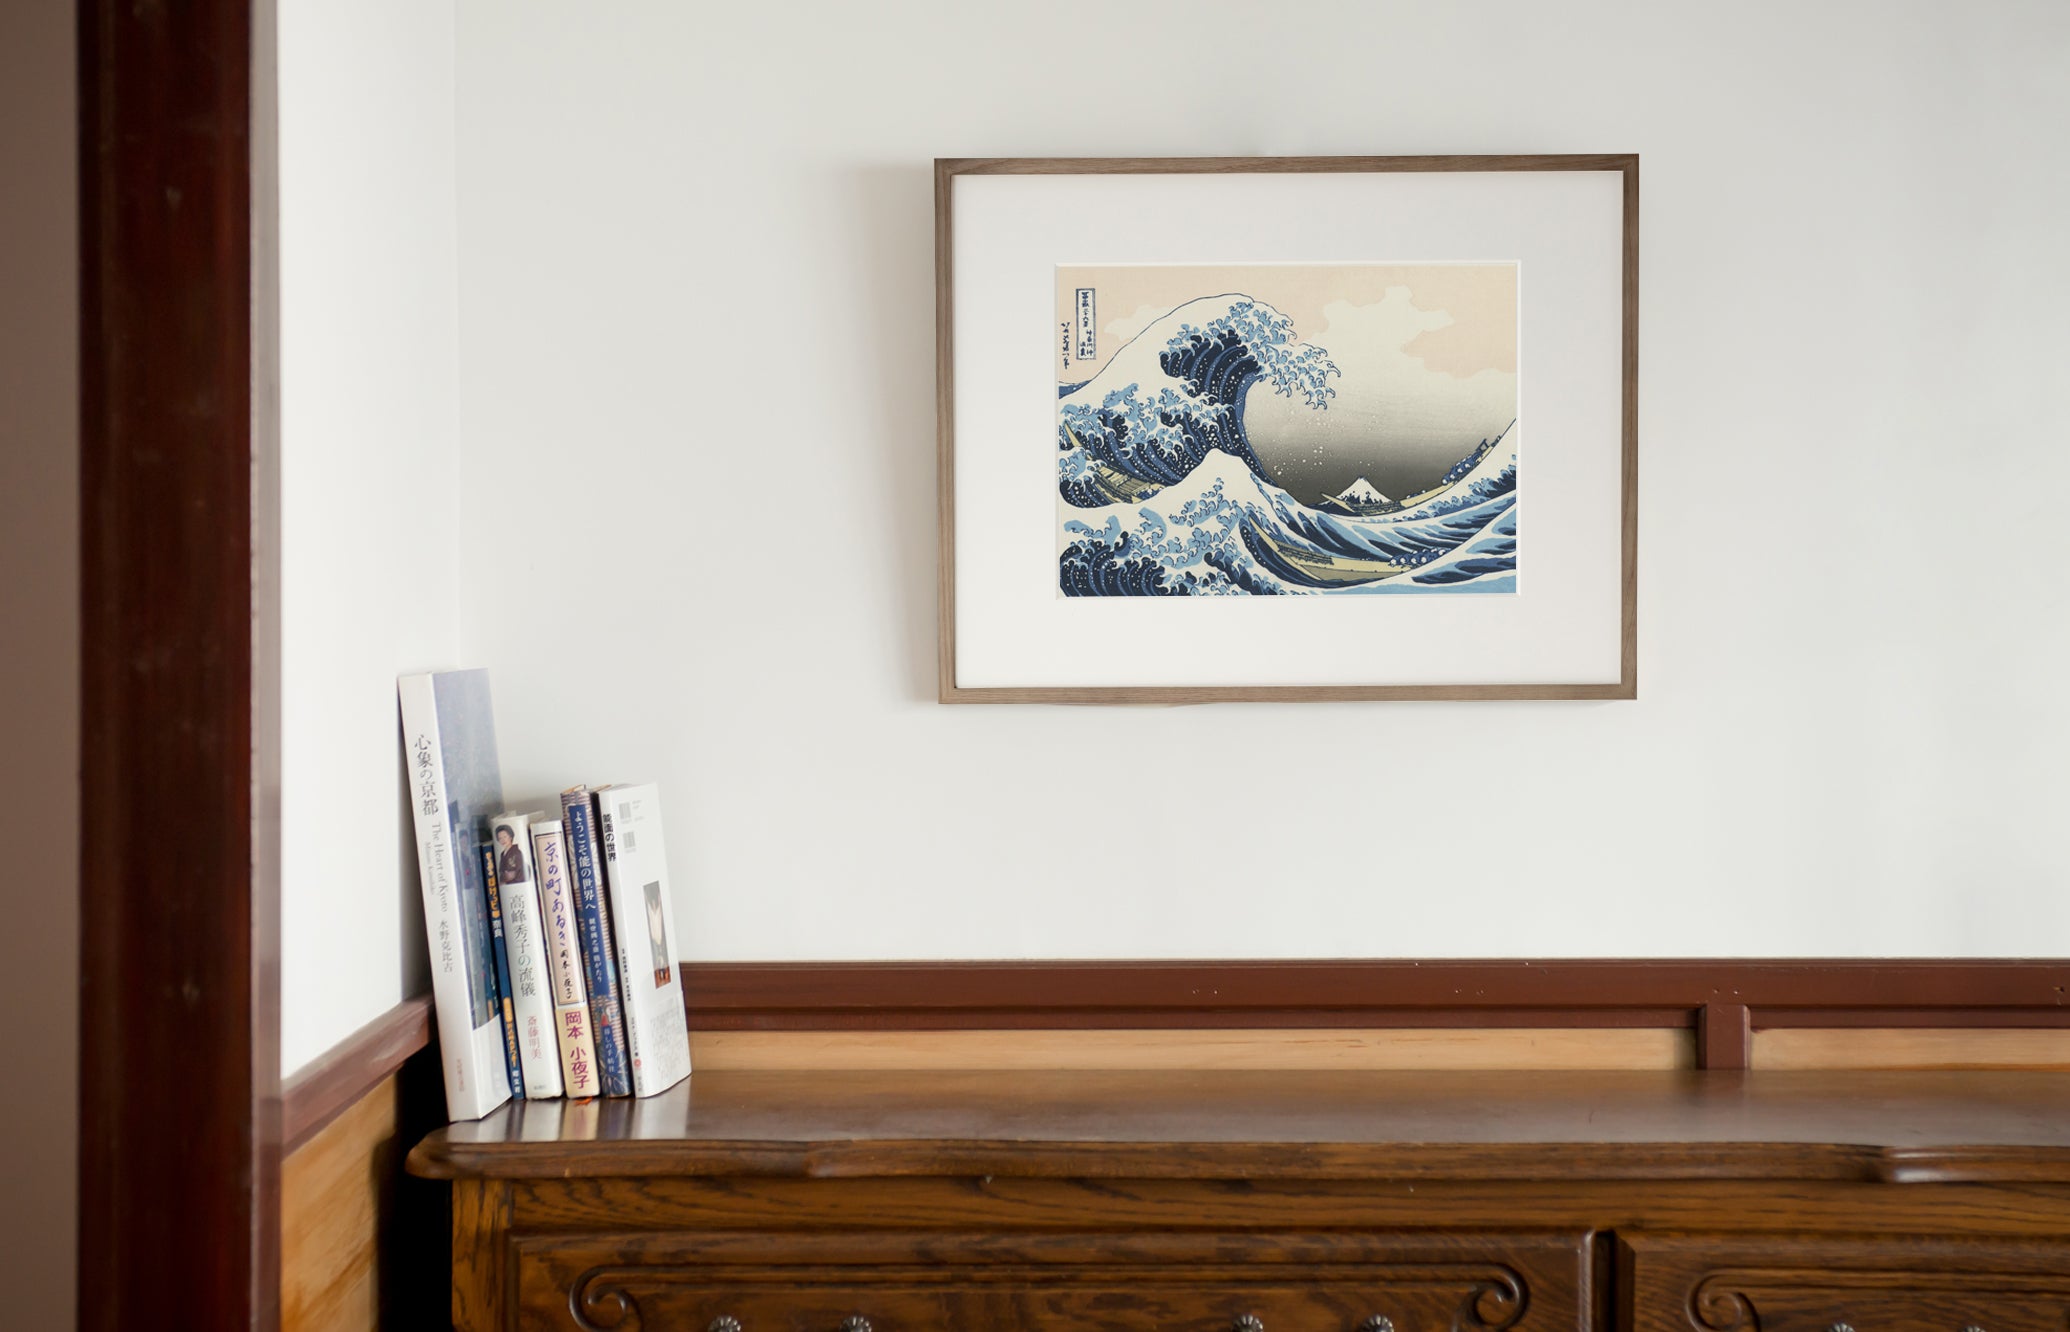 Ukiyo-e Katsushika Hokusai Trente-six Vues du Mont Fuji